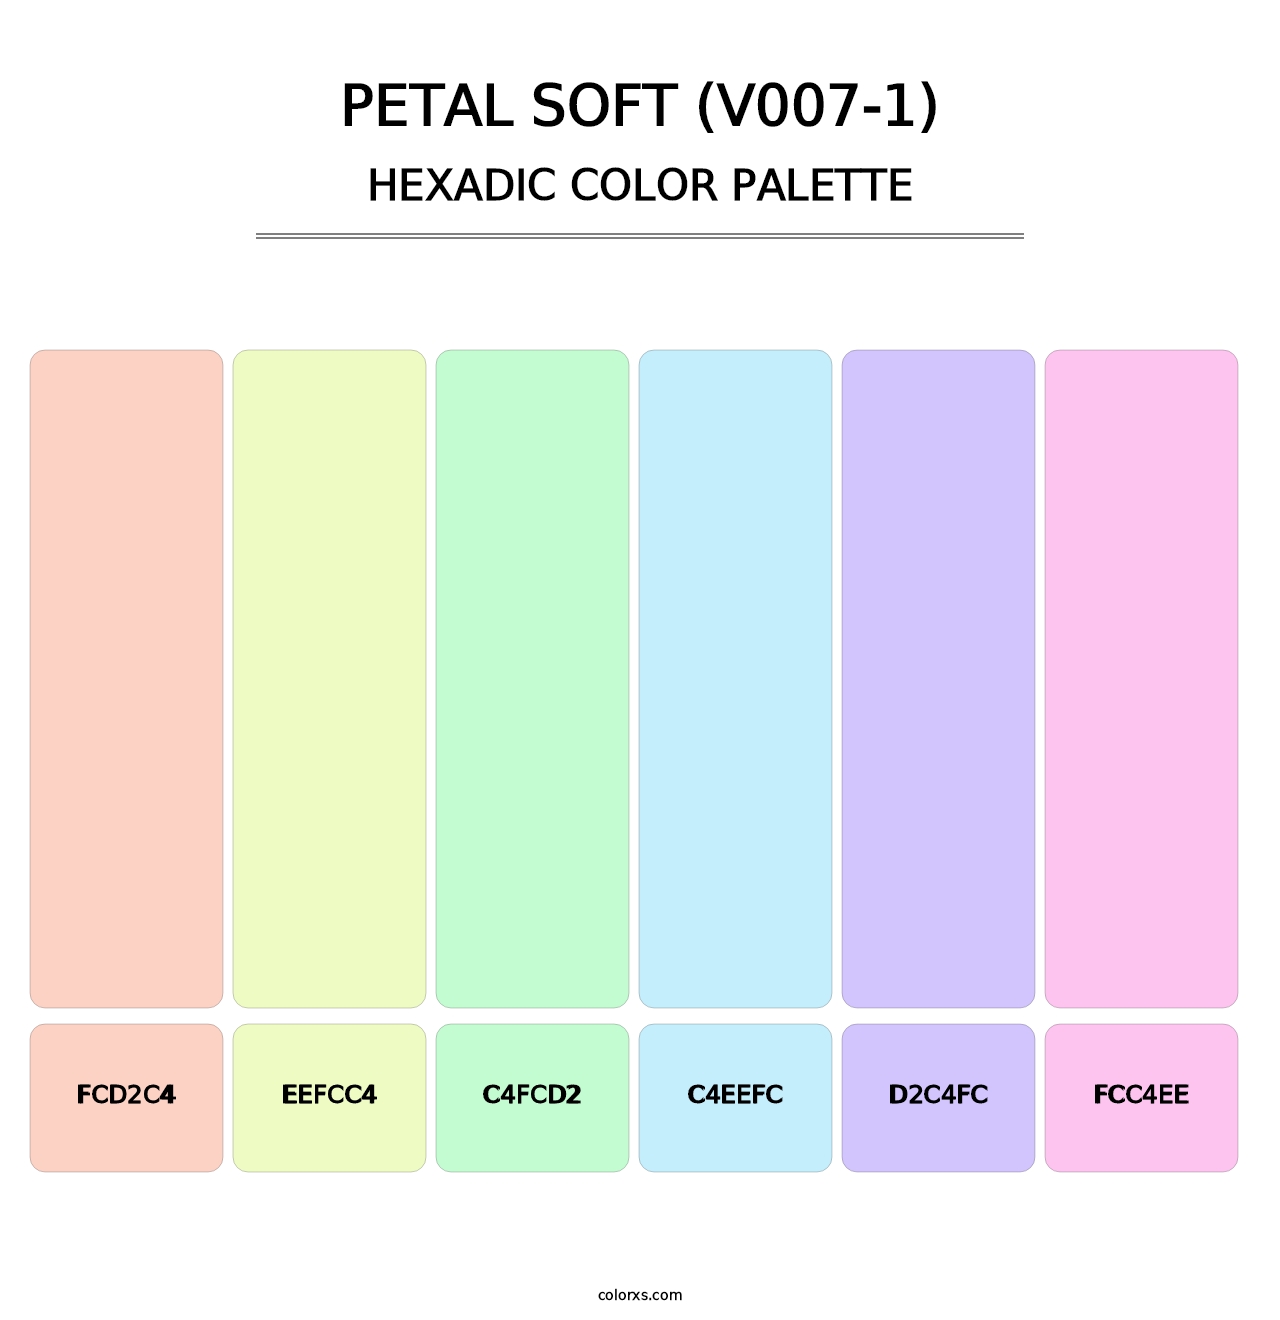 Petal Soft (V007-1) - Hexadic Color Palette